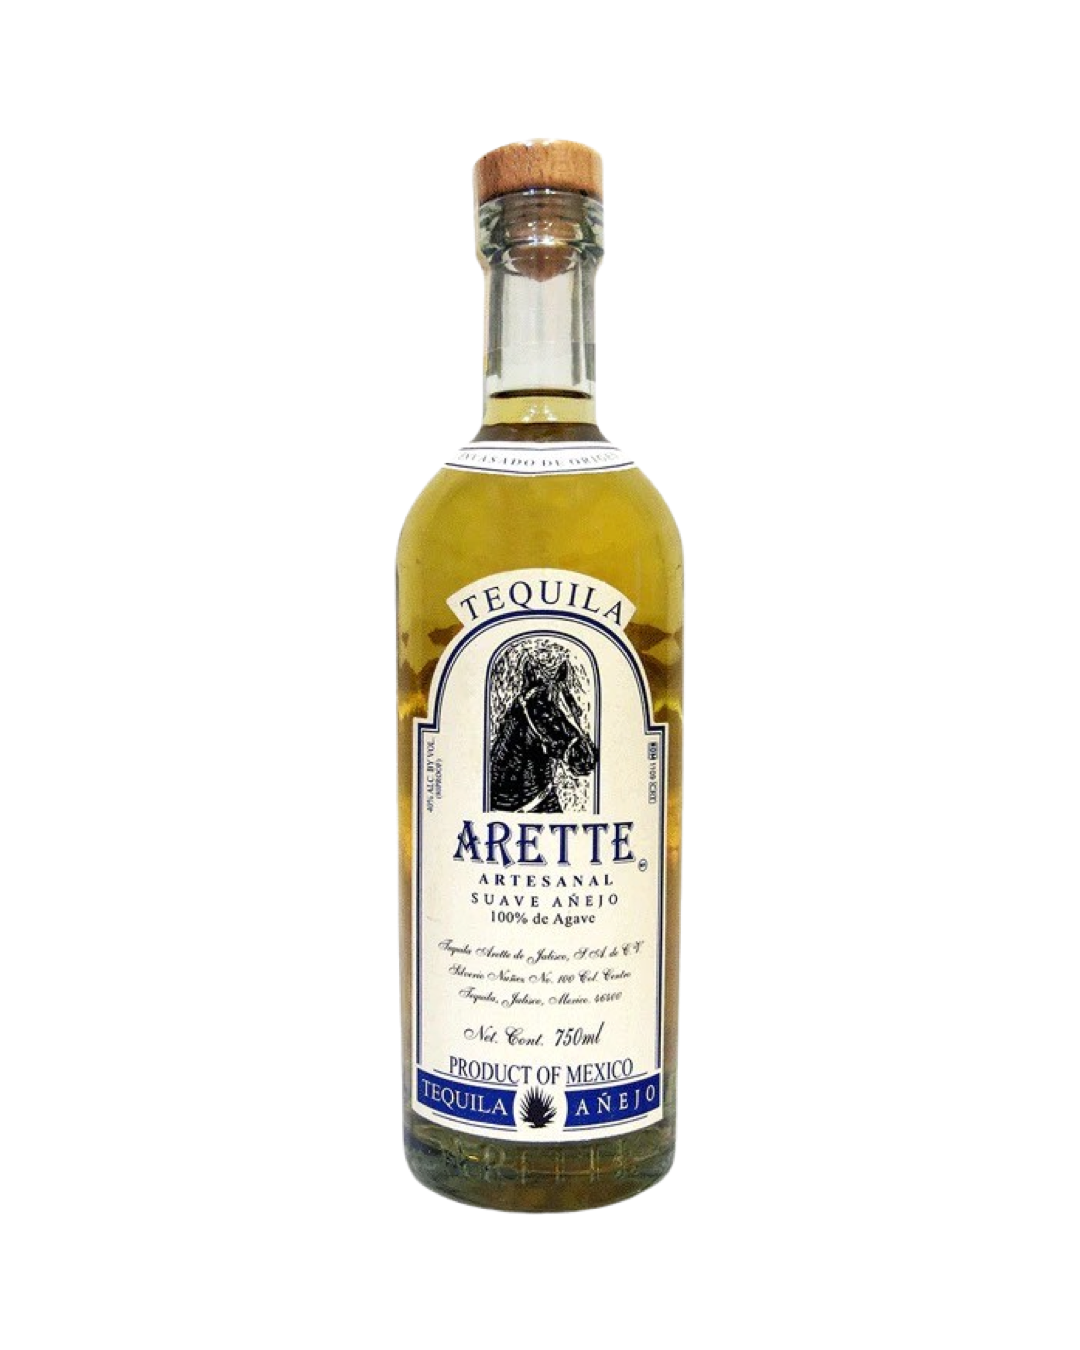 Arette Artsanal Suave Anejo Tequila 750ml